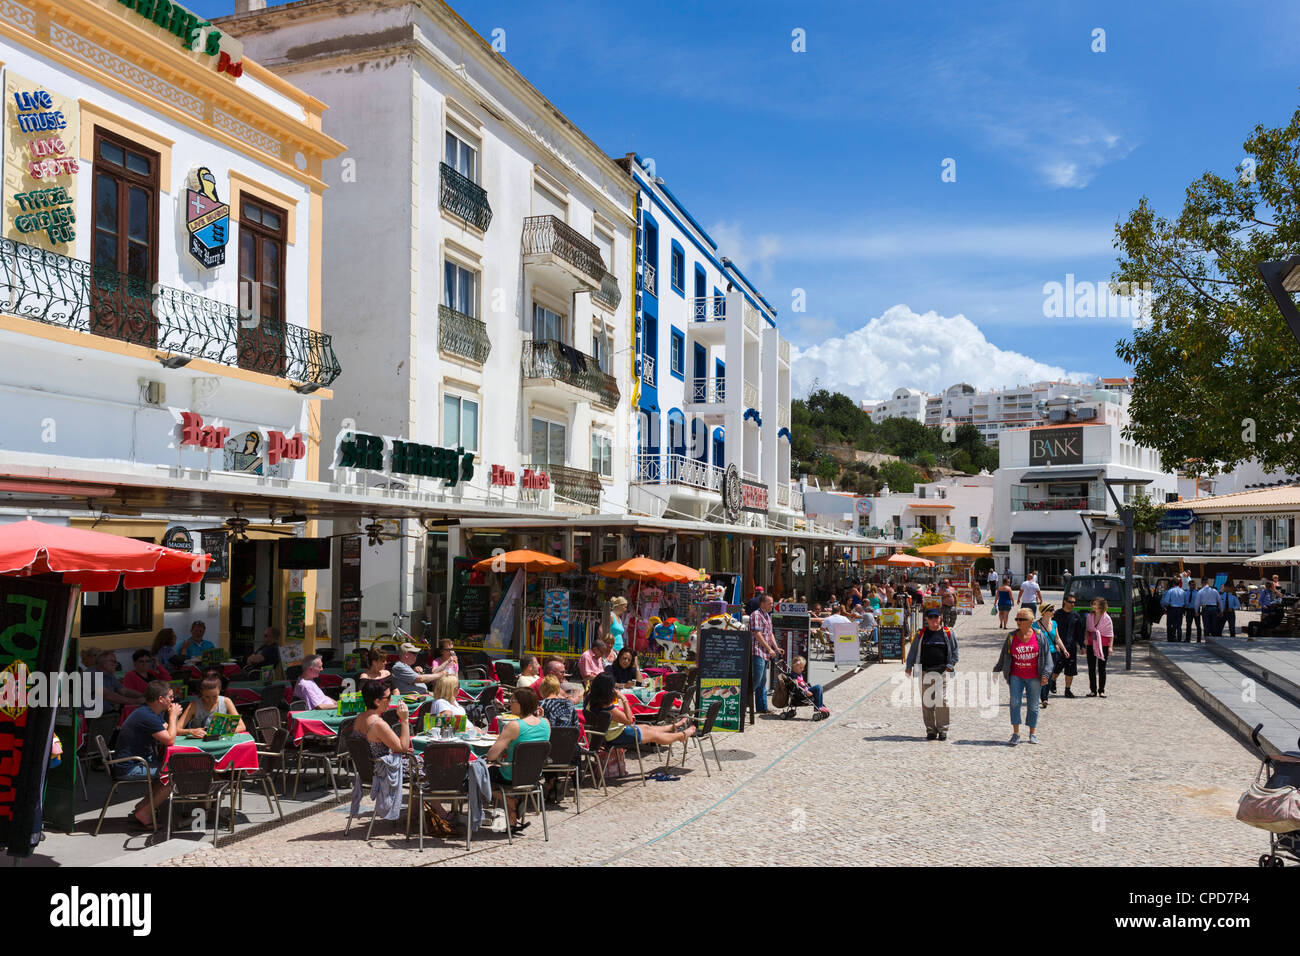 Cafes and bars in the Praca da Republica (Main Square) in the old town centre, Albufeira, Algarve, Portugal Stock Photo